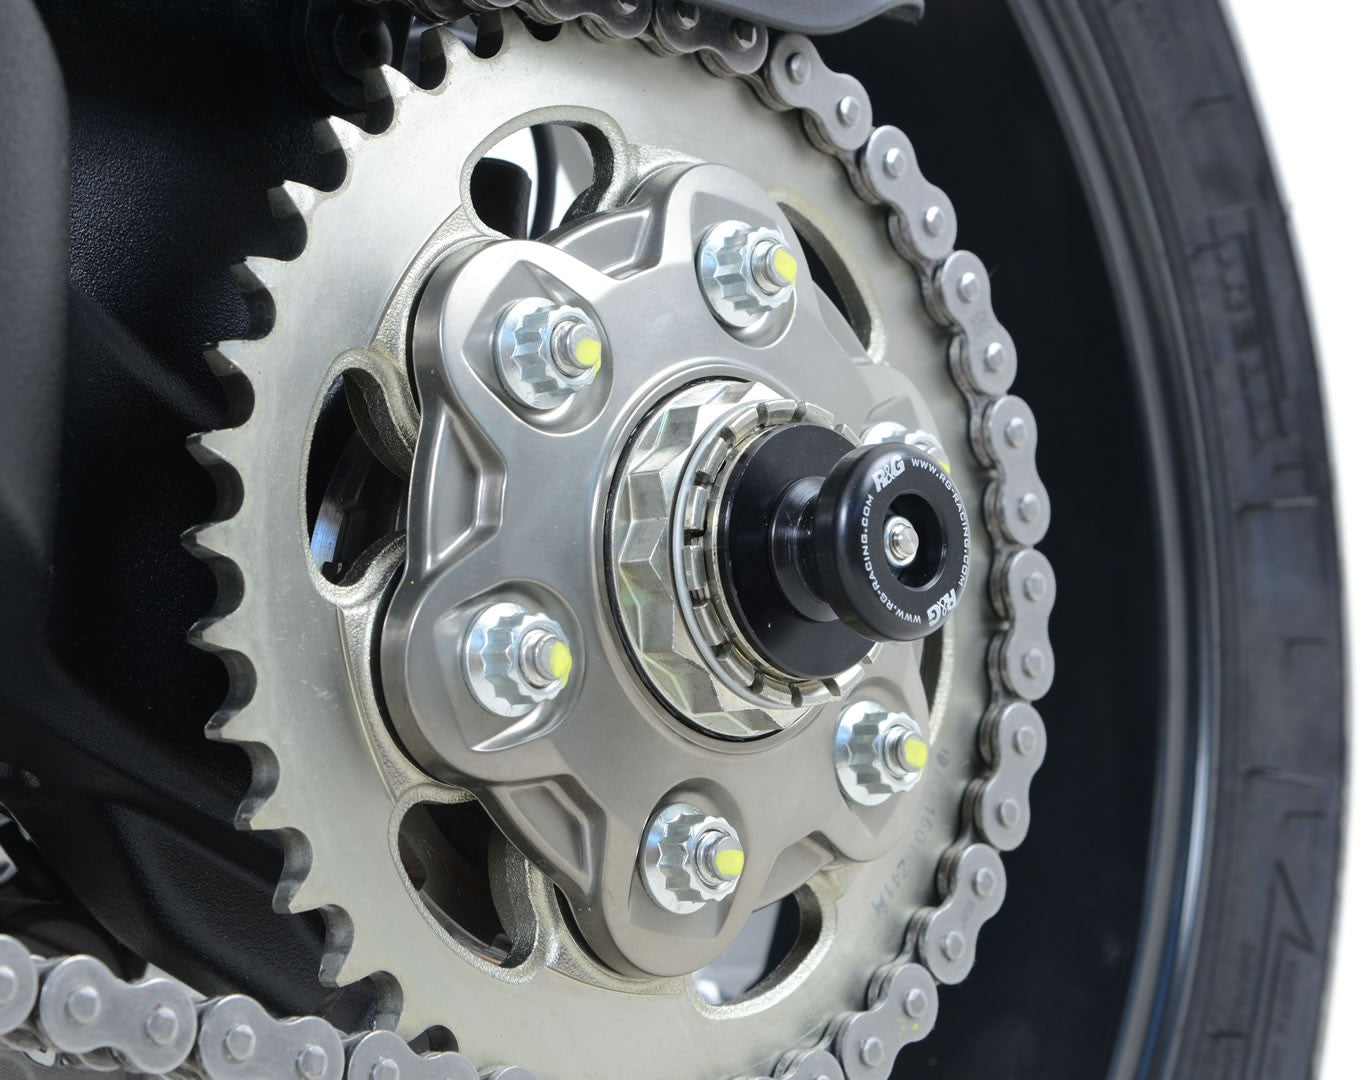 R&G Spools for Ducati Panigale V4